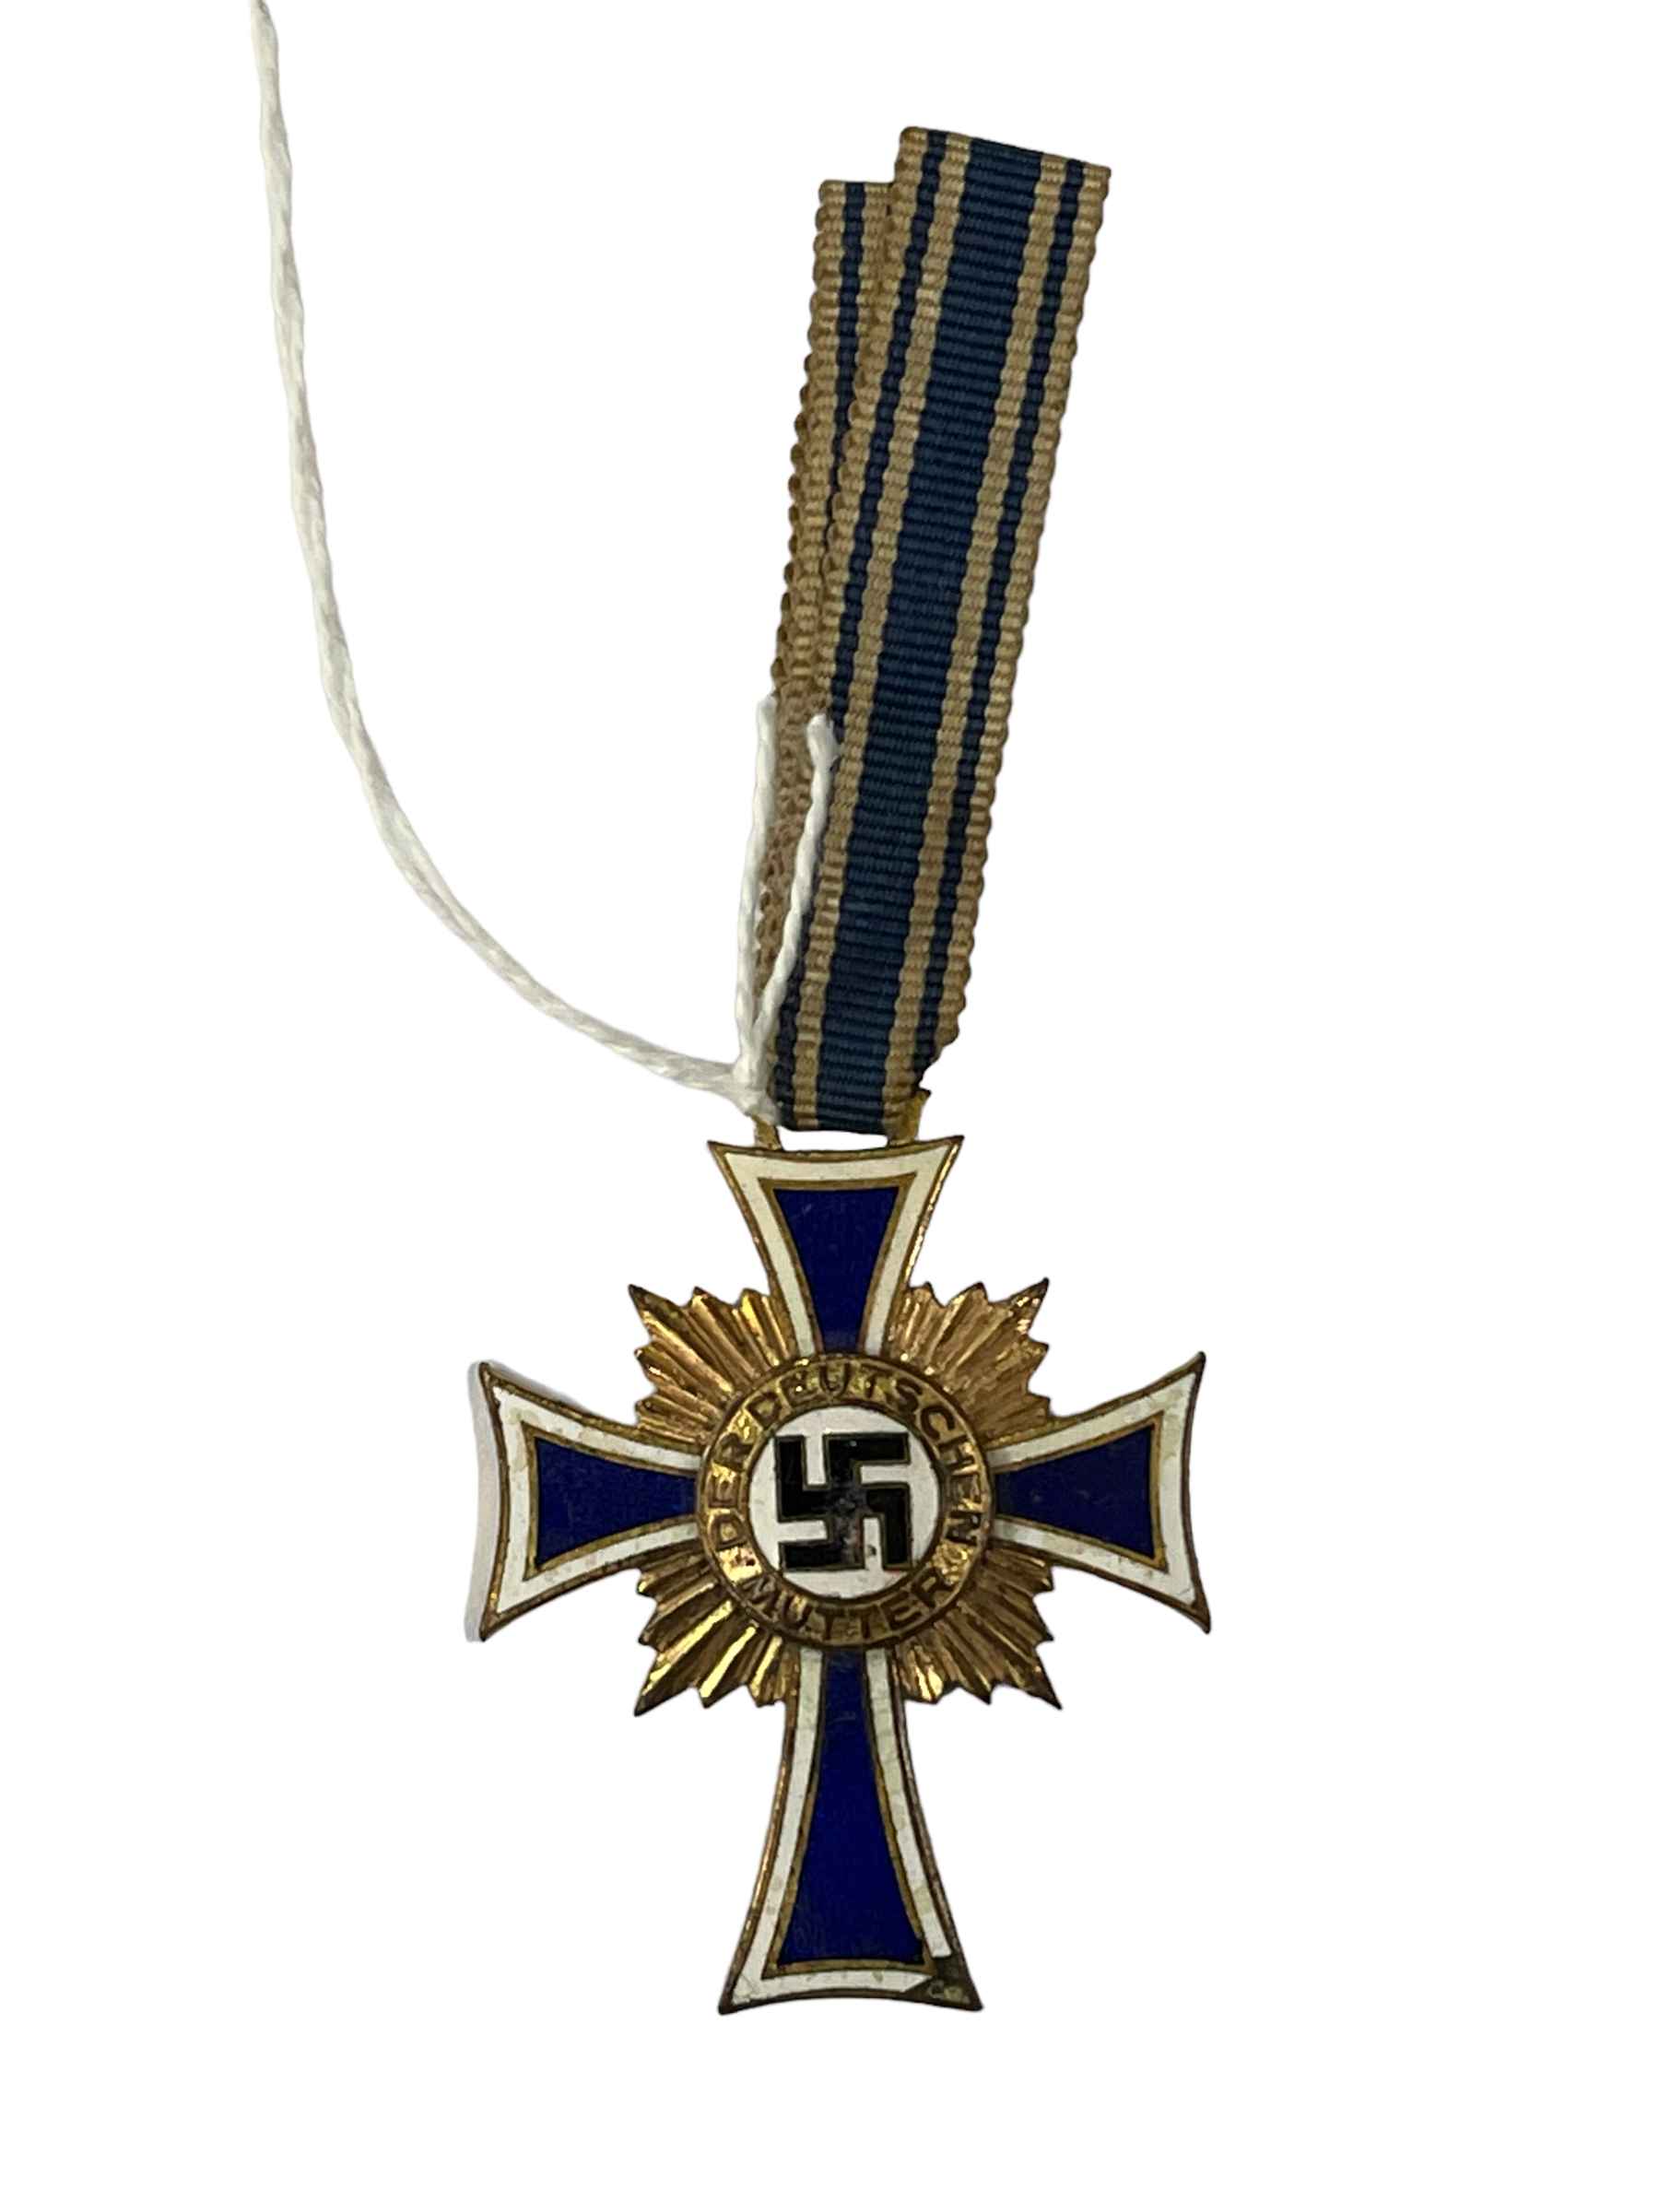 WWII German Mutter medal.